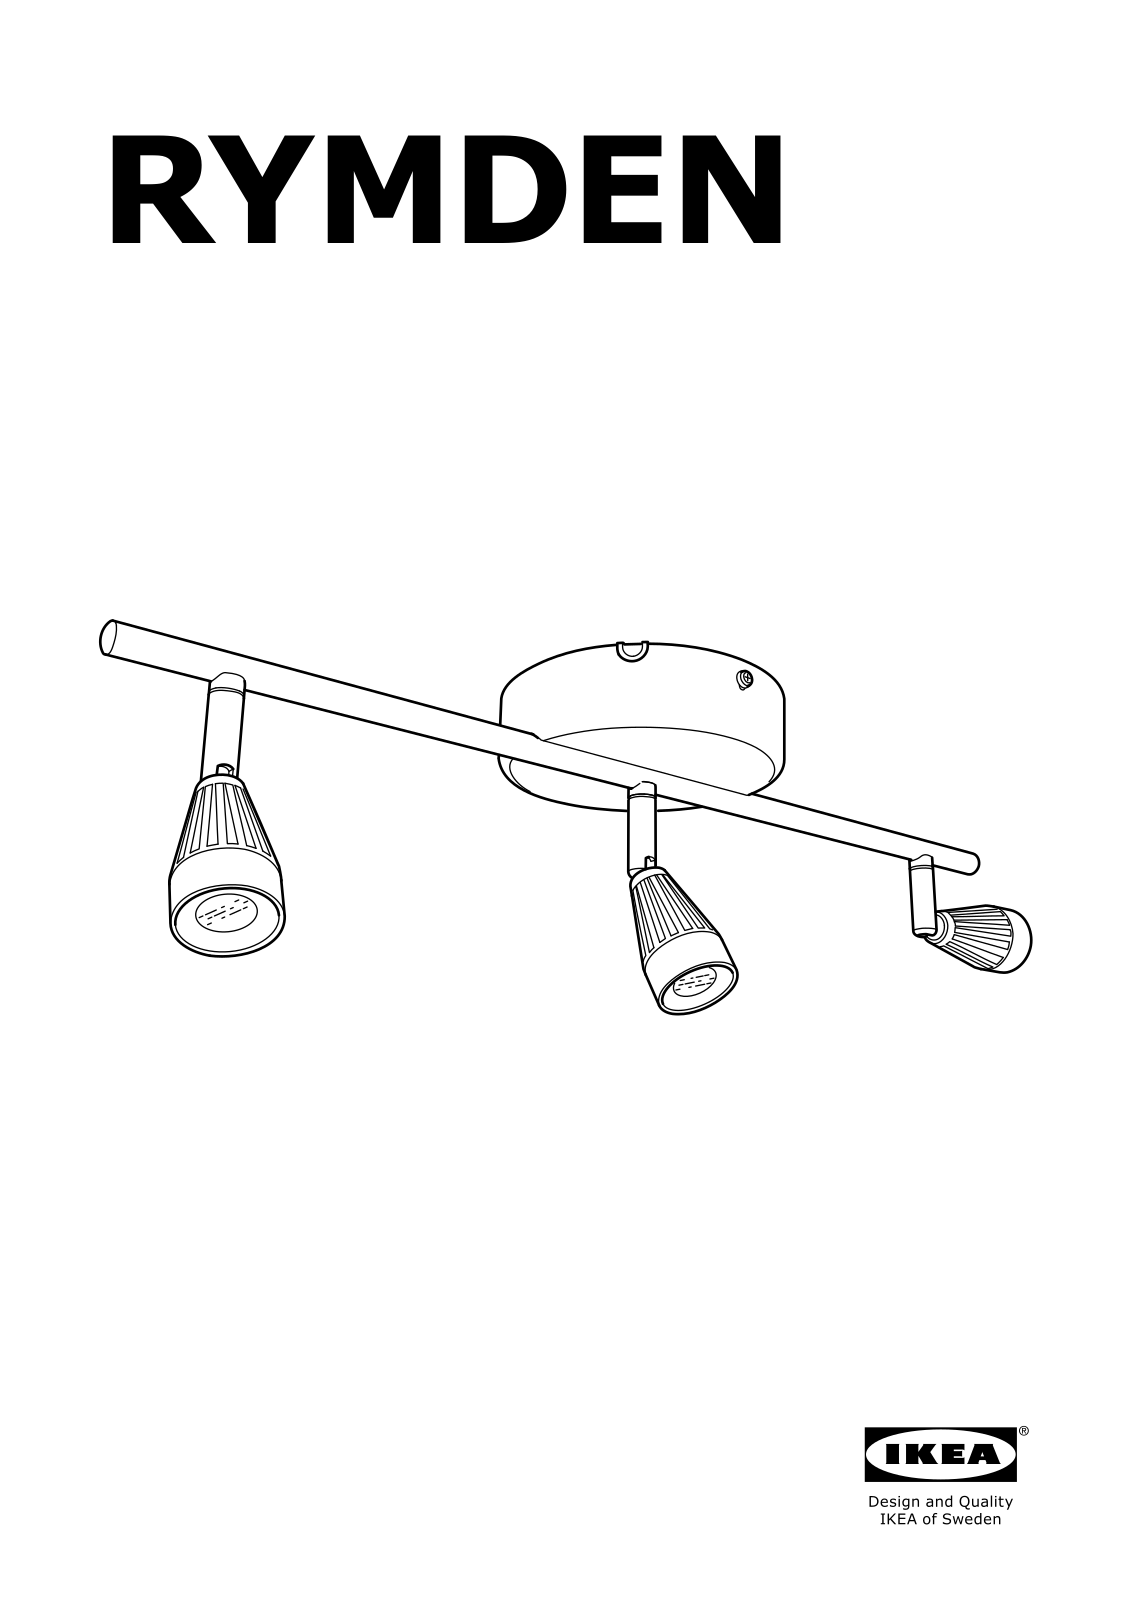 IKEA RYMDEN User Manual